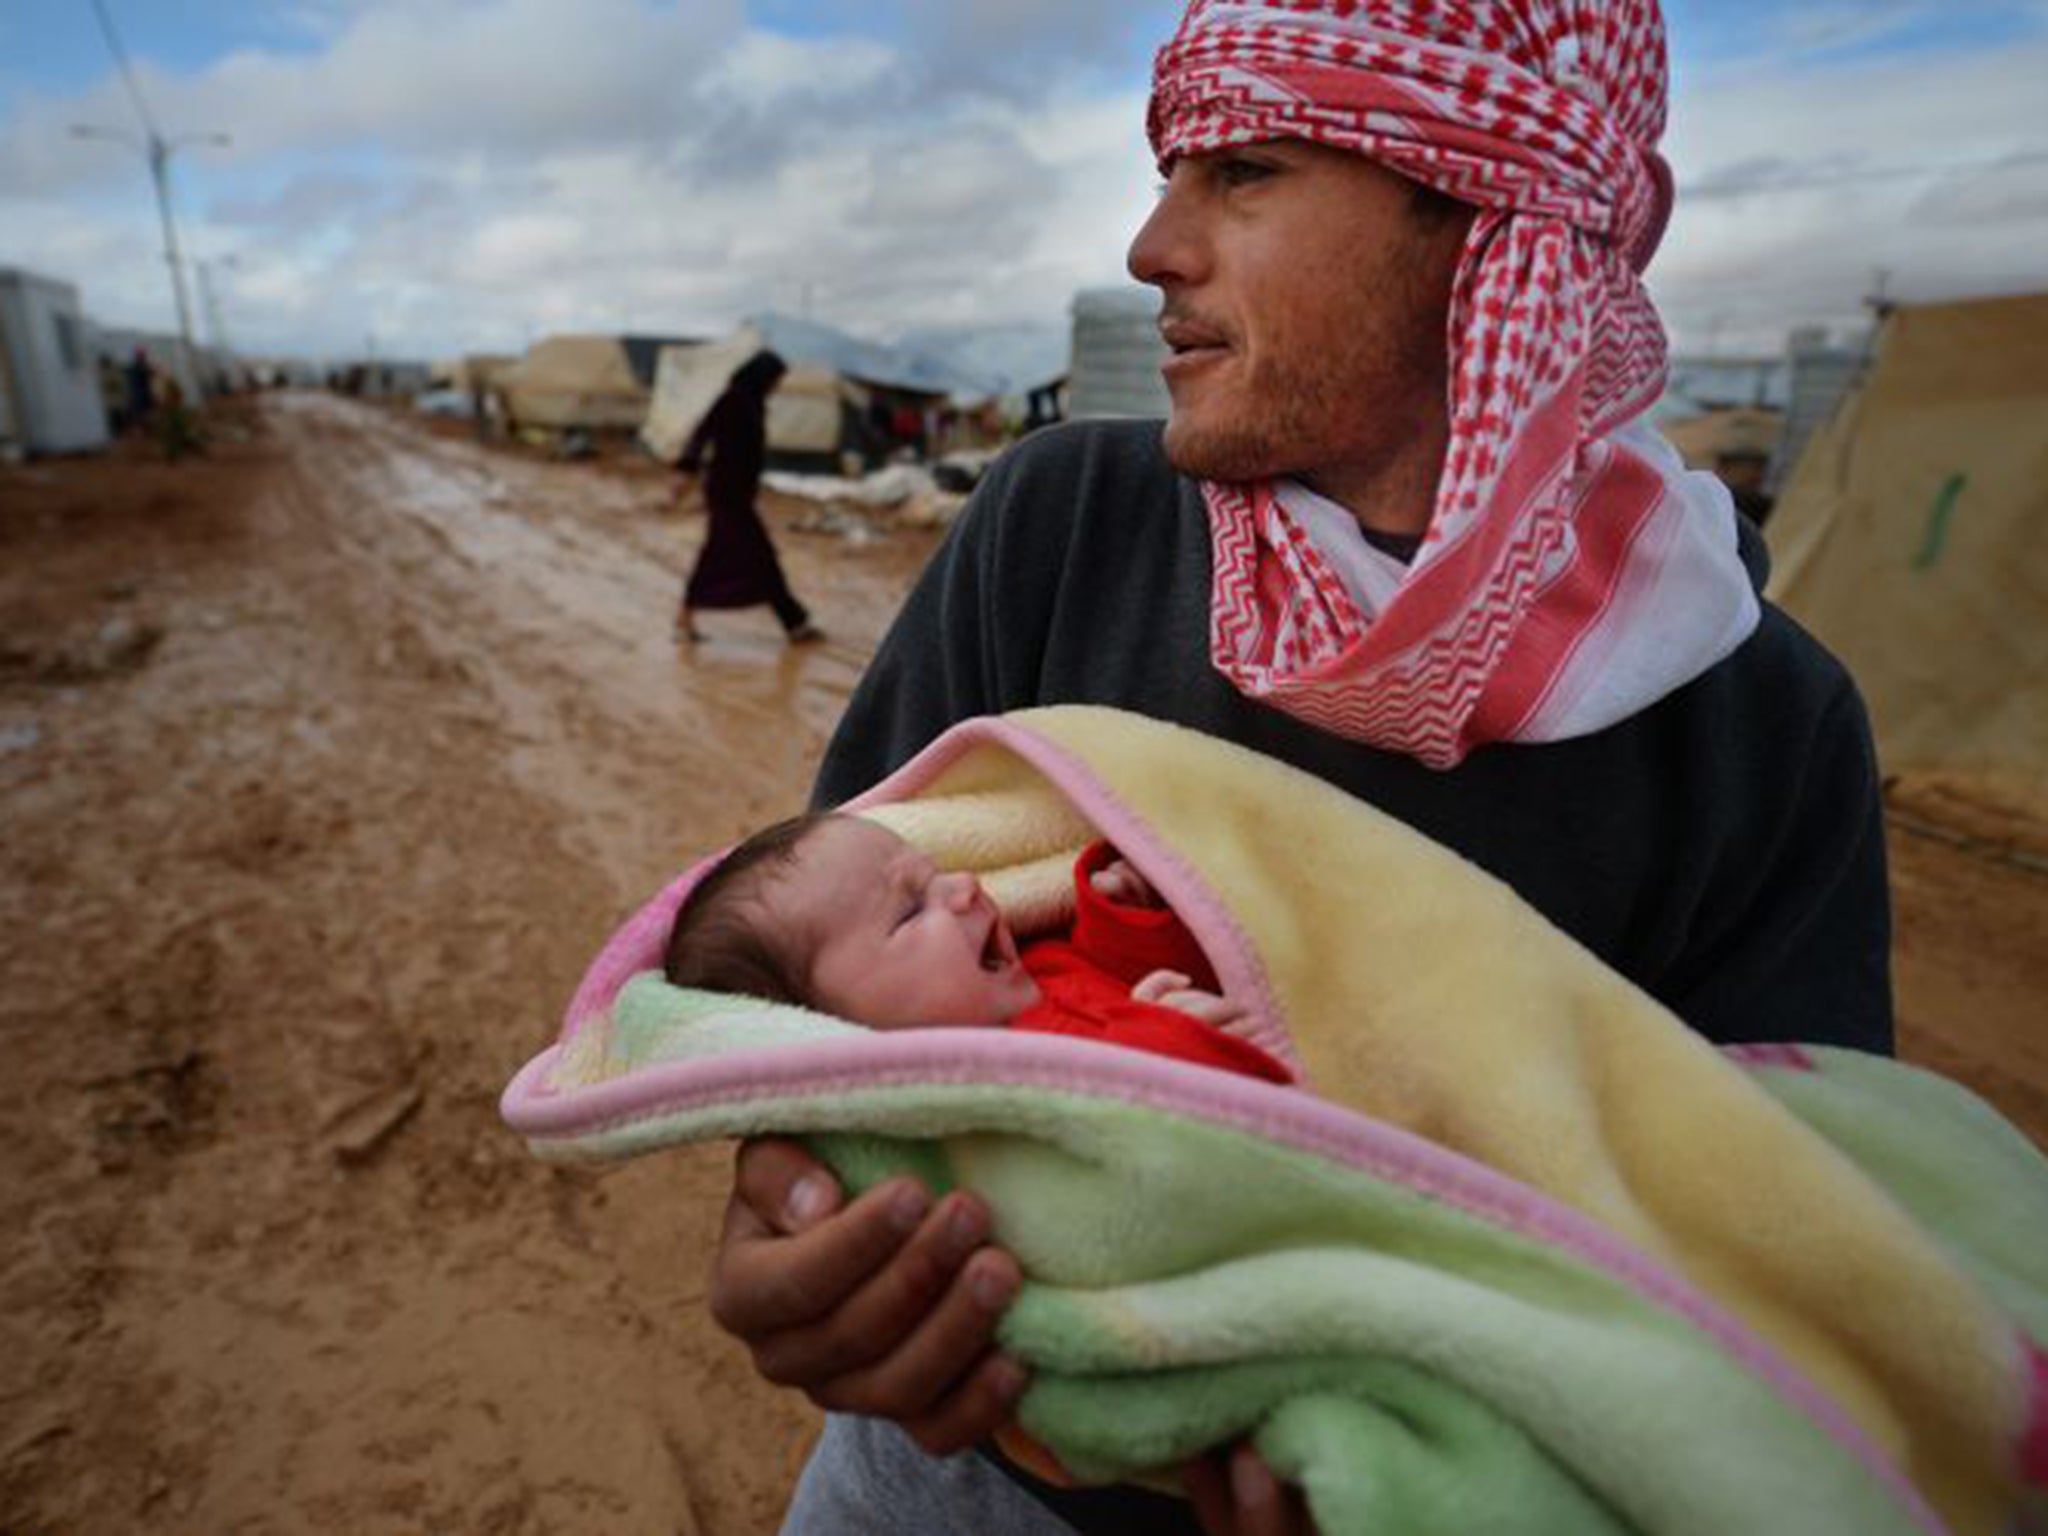 &#13;
A Syrian man holds a newborn child &#13;